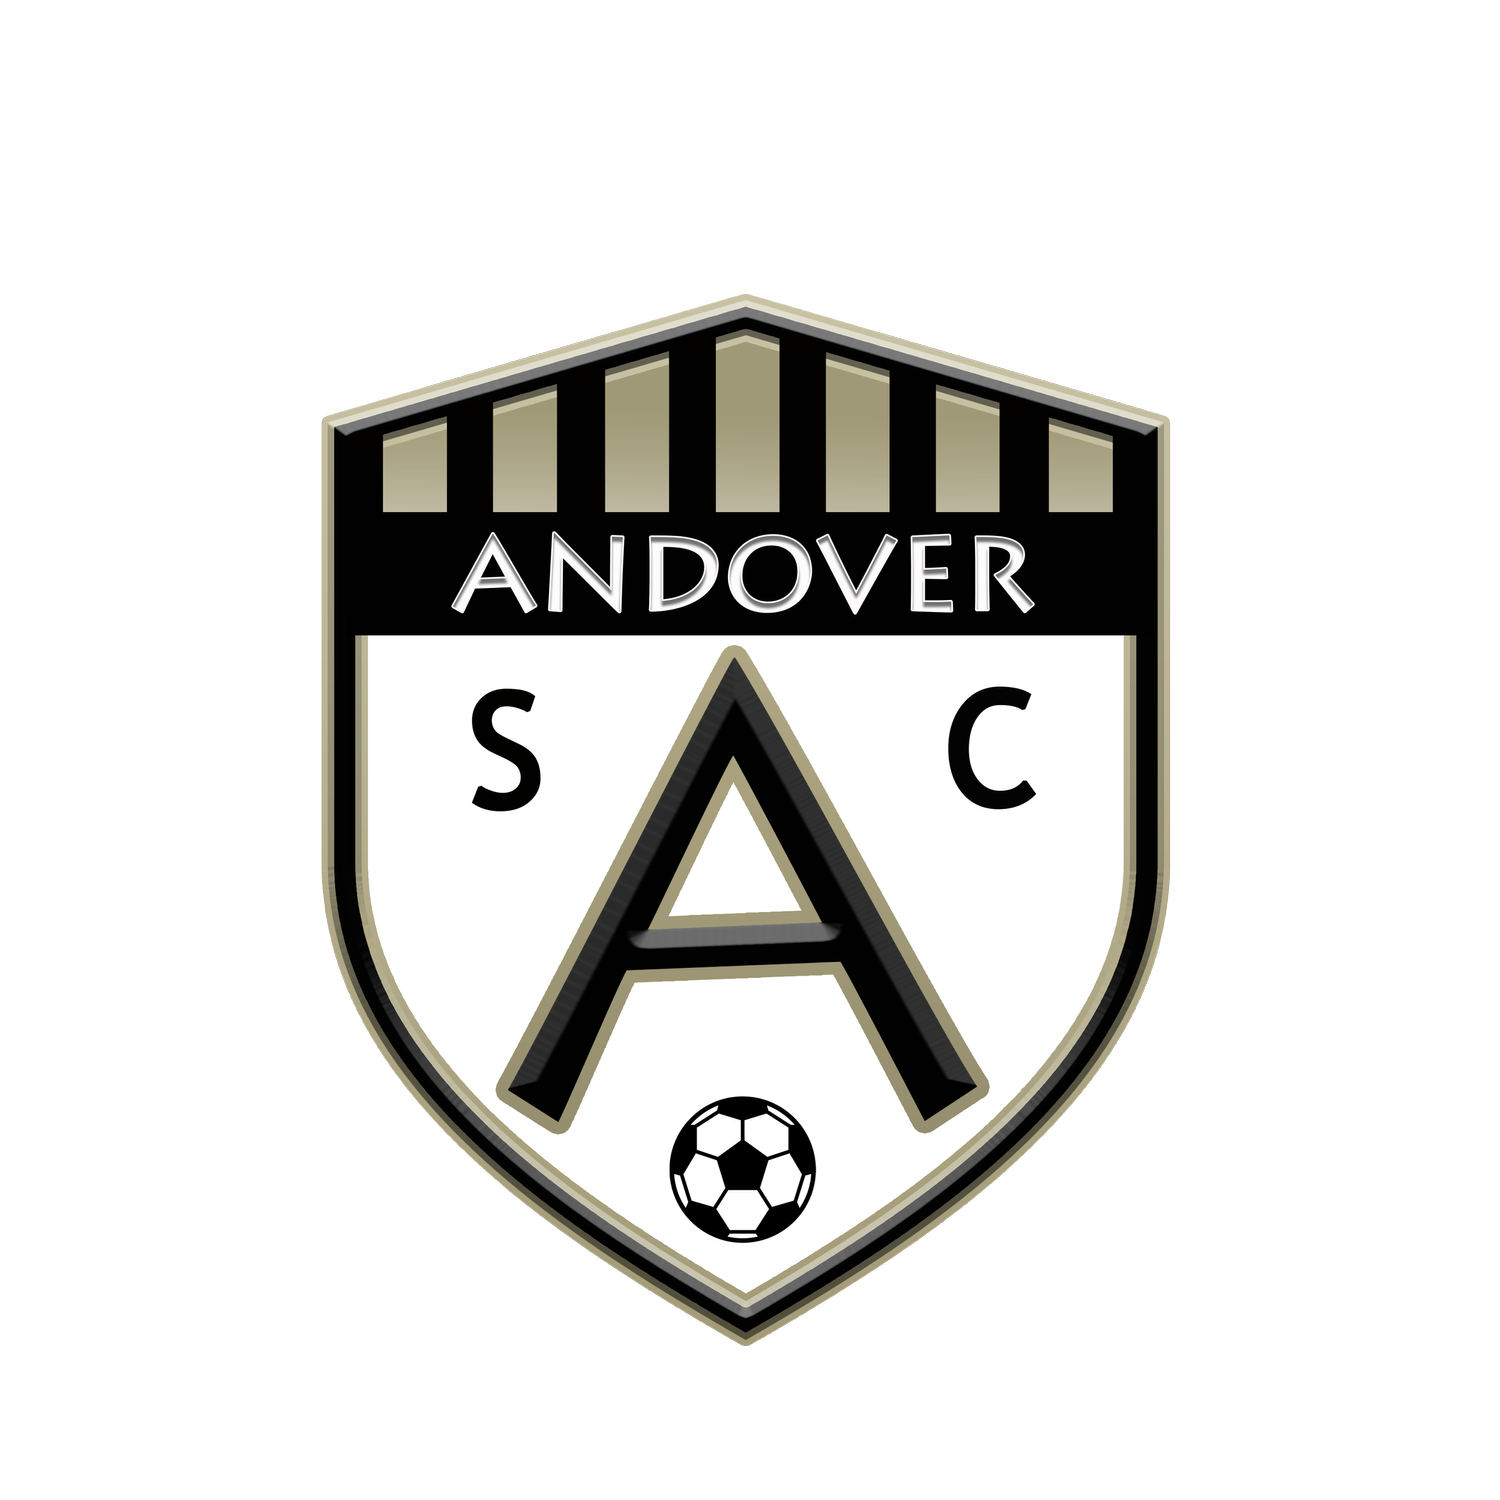 Andover Soccer Club